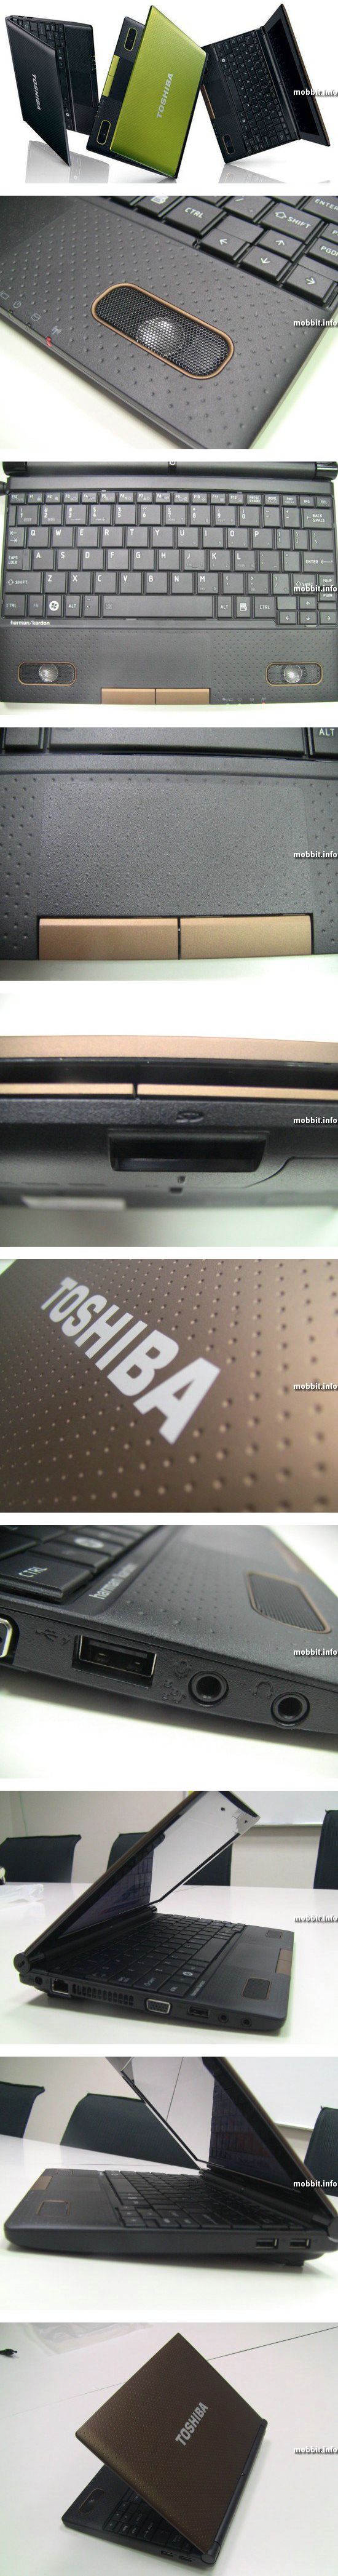 Toshiba mini NB520